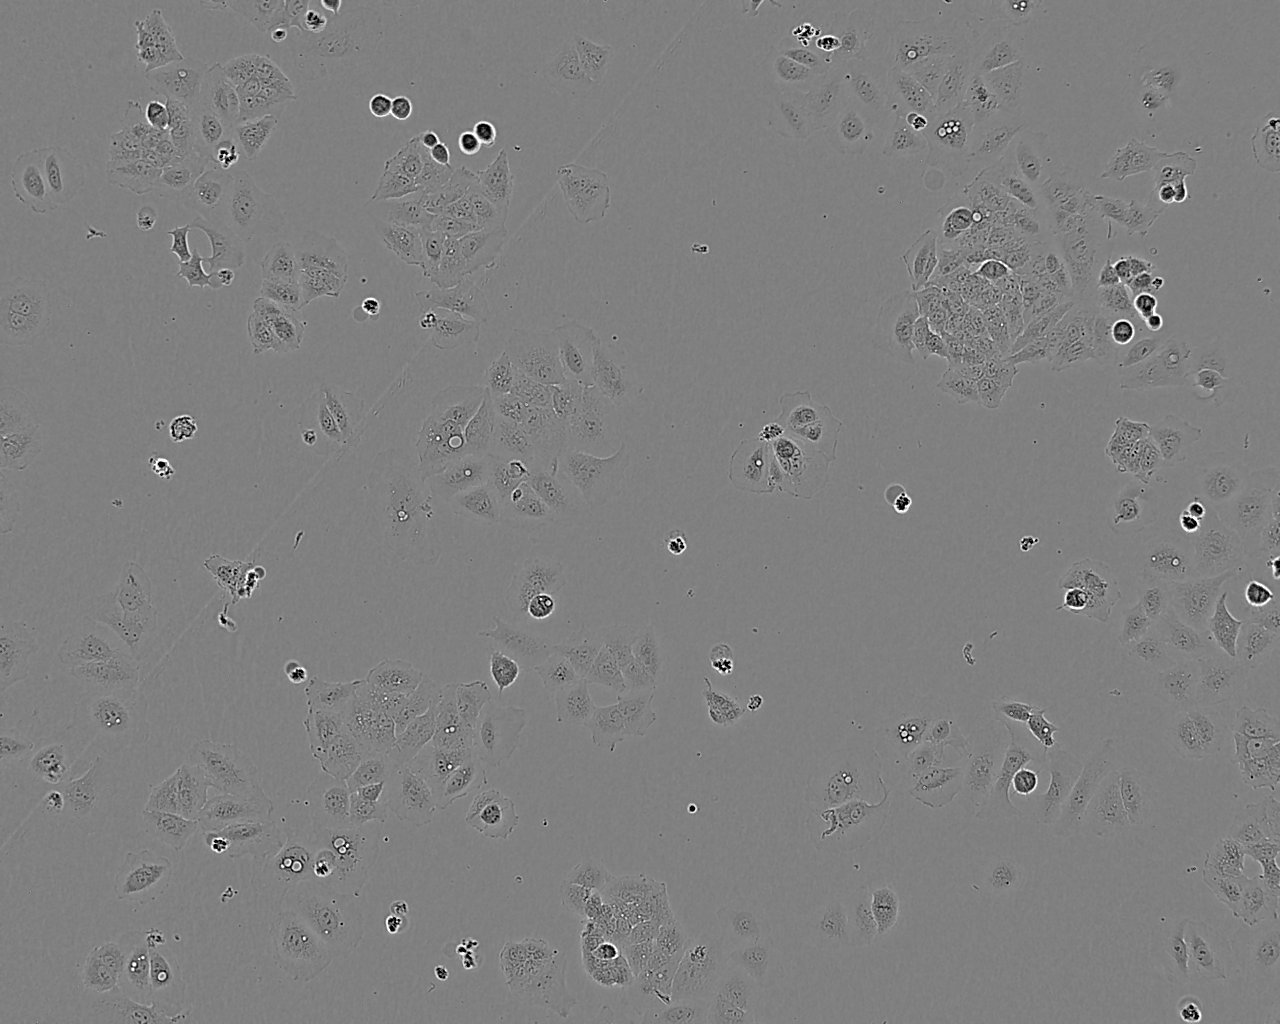 COS-7 epithelioid cellsSV40转化的非洲绿猴肾细胞系,COS-7 epithelioid cells